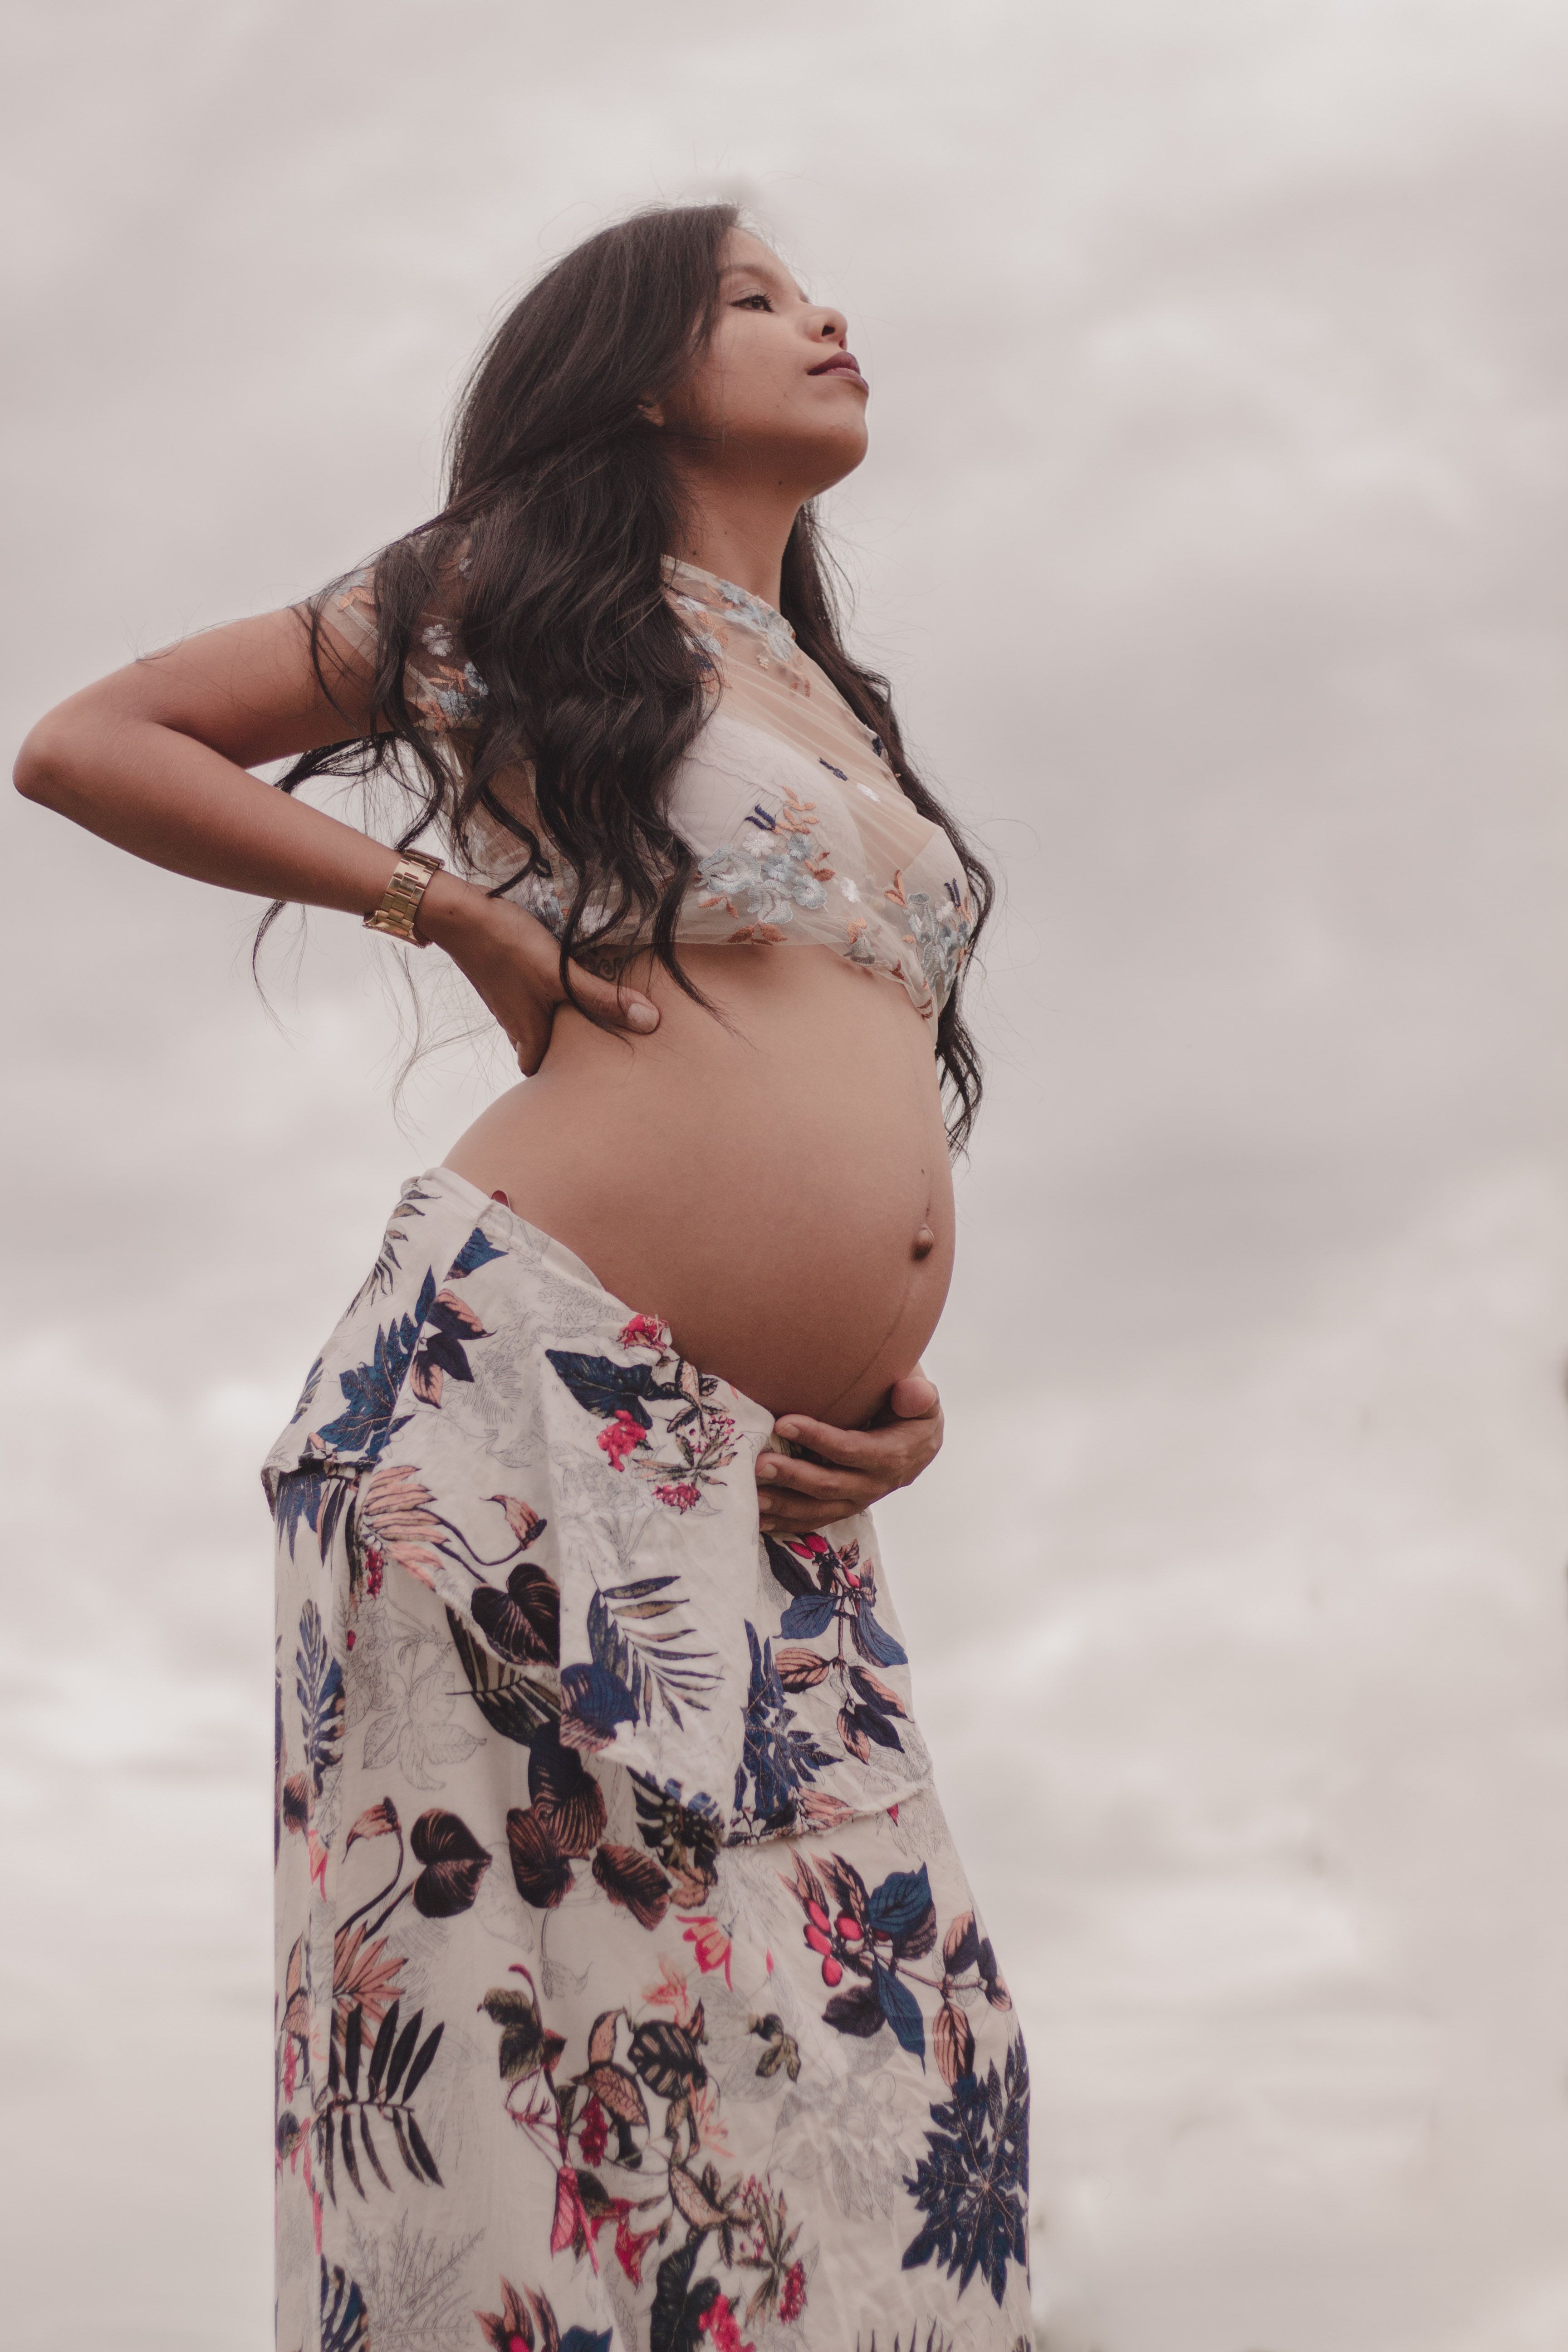 Pregnant Woman Wearing Crop Top · Free